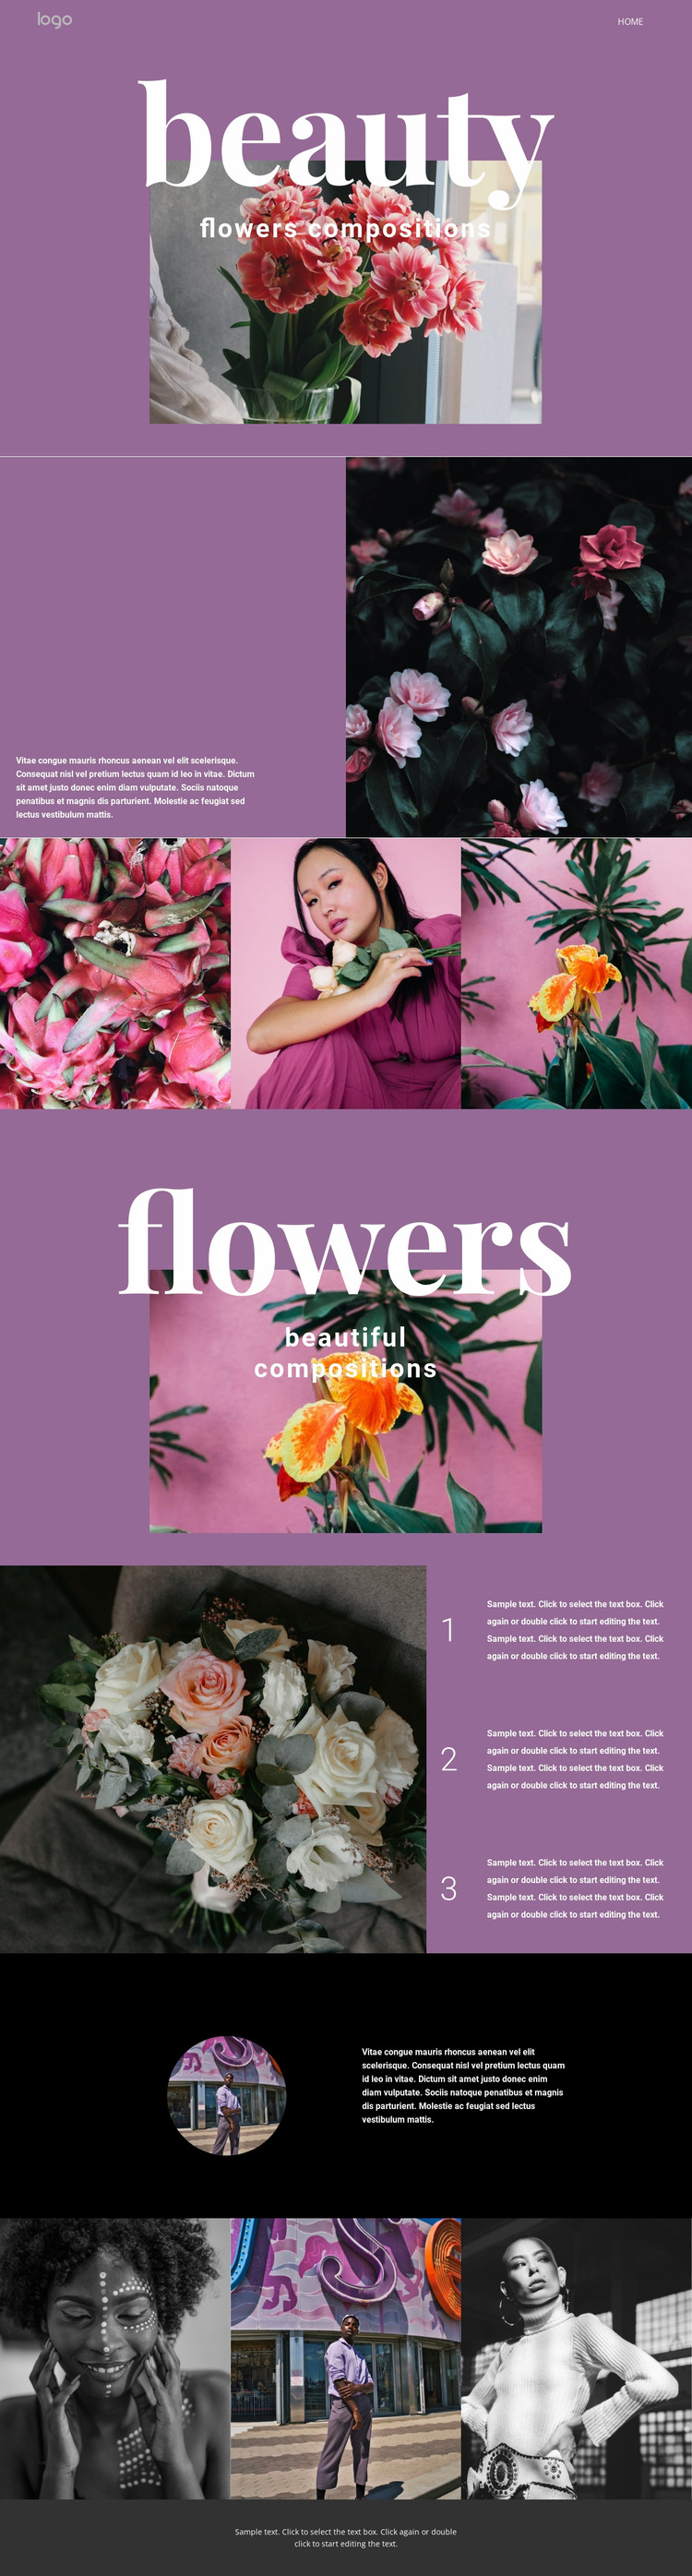 Flower salon Website Builder Templates